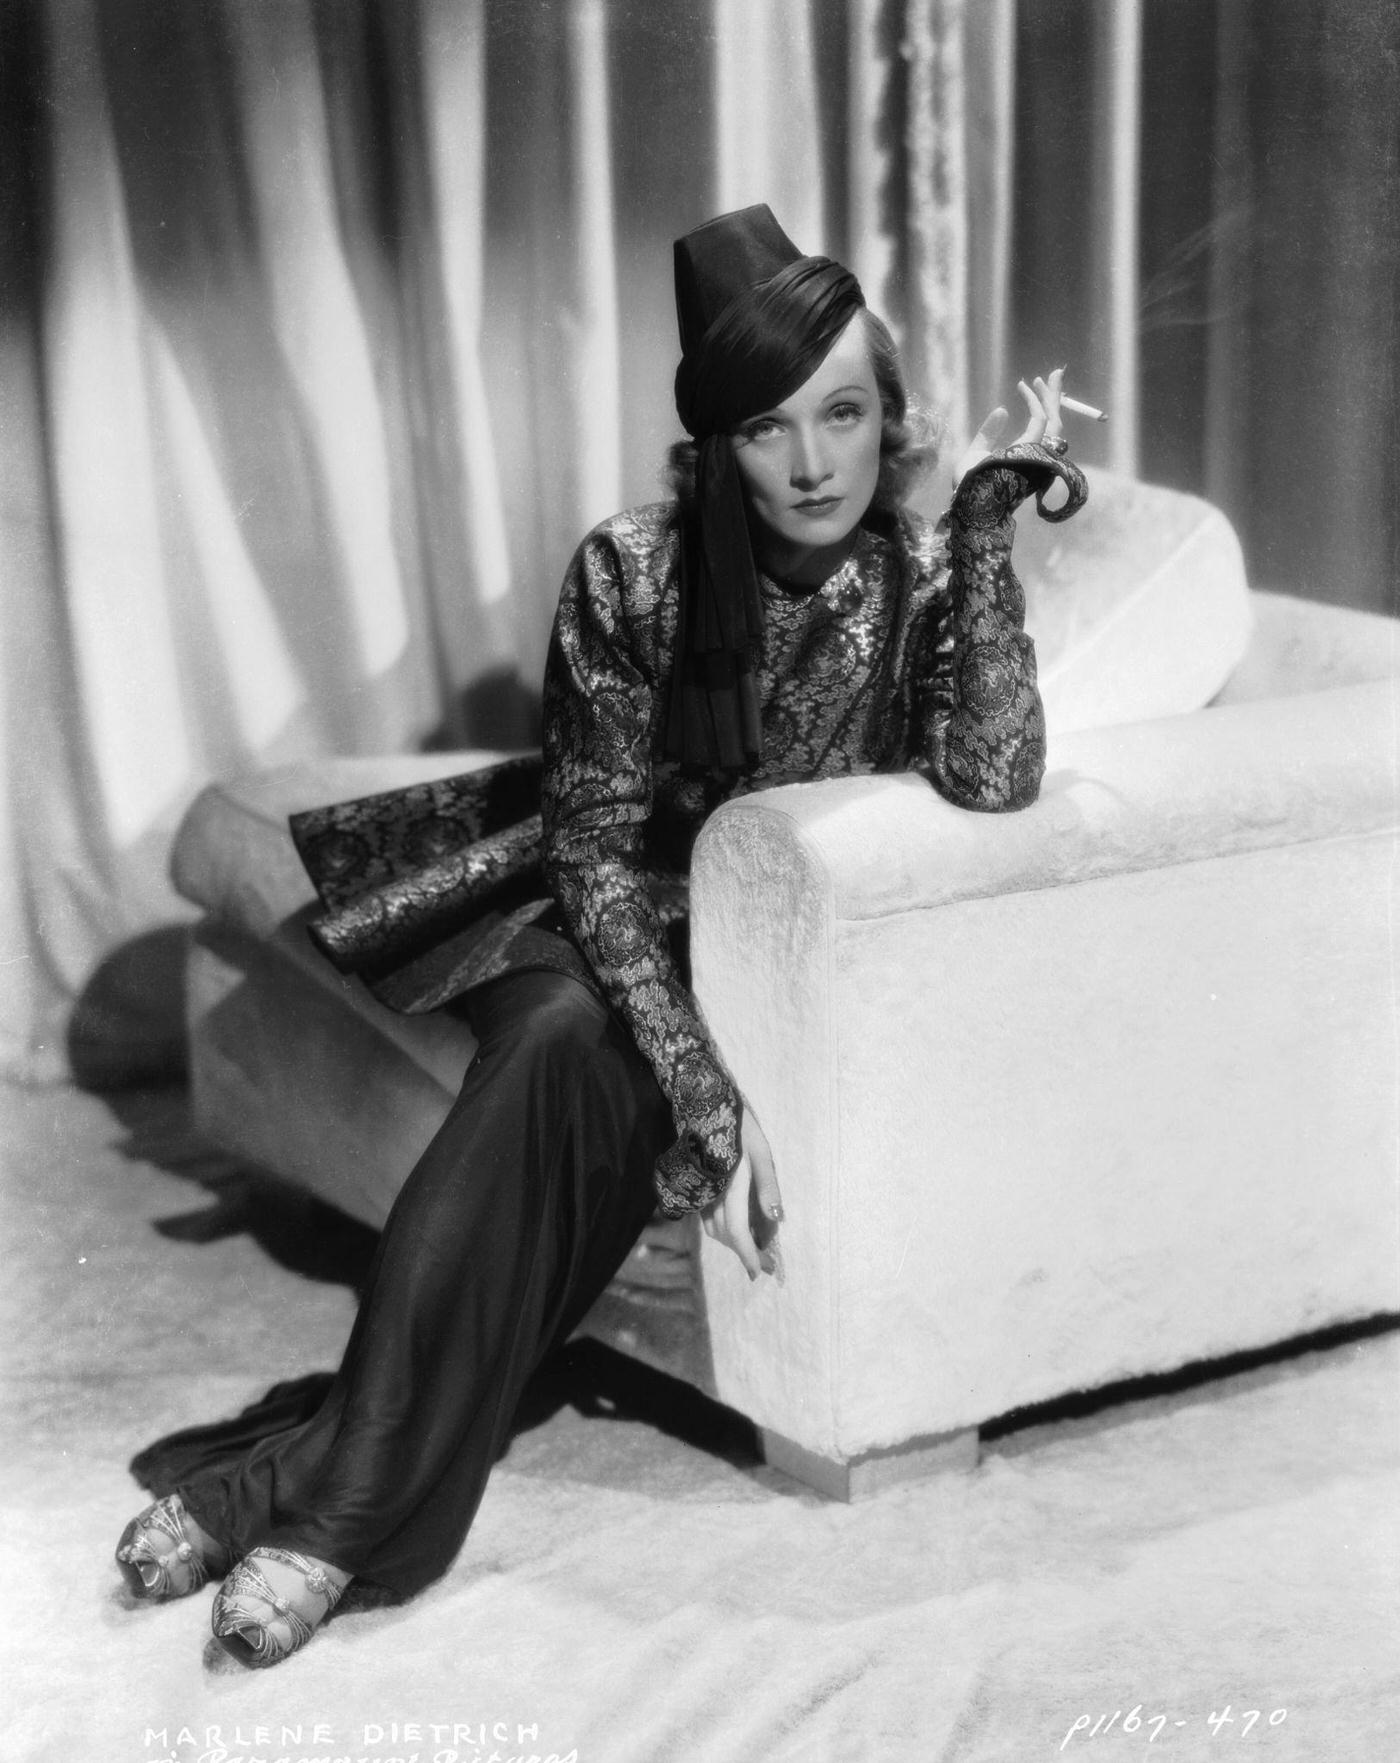 Marlene Dietrich appears in a scene from the romantic drama 'Angel' in 1937.